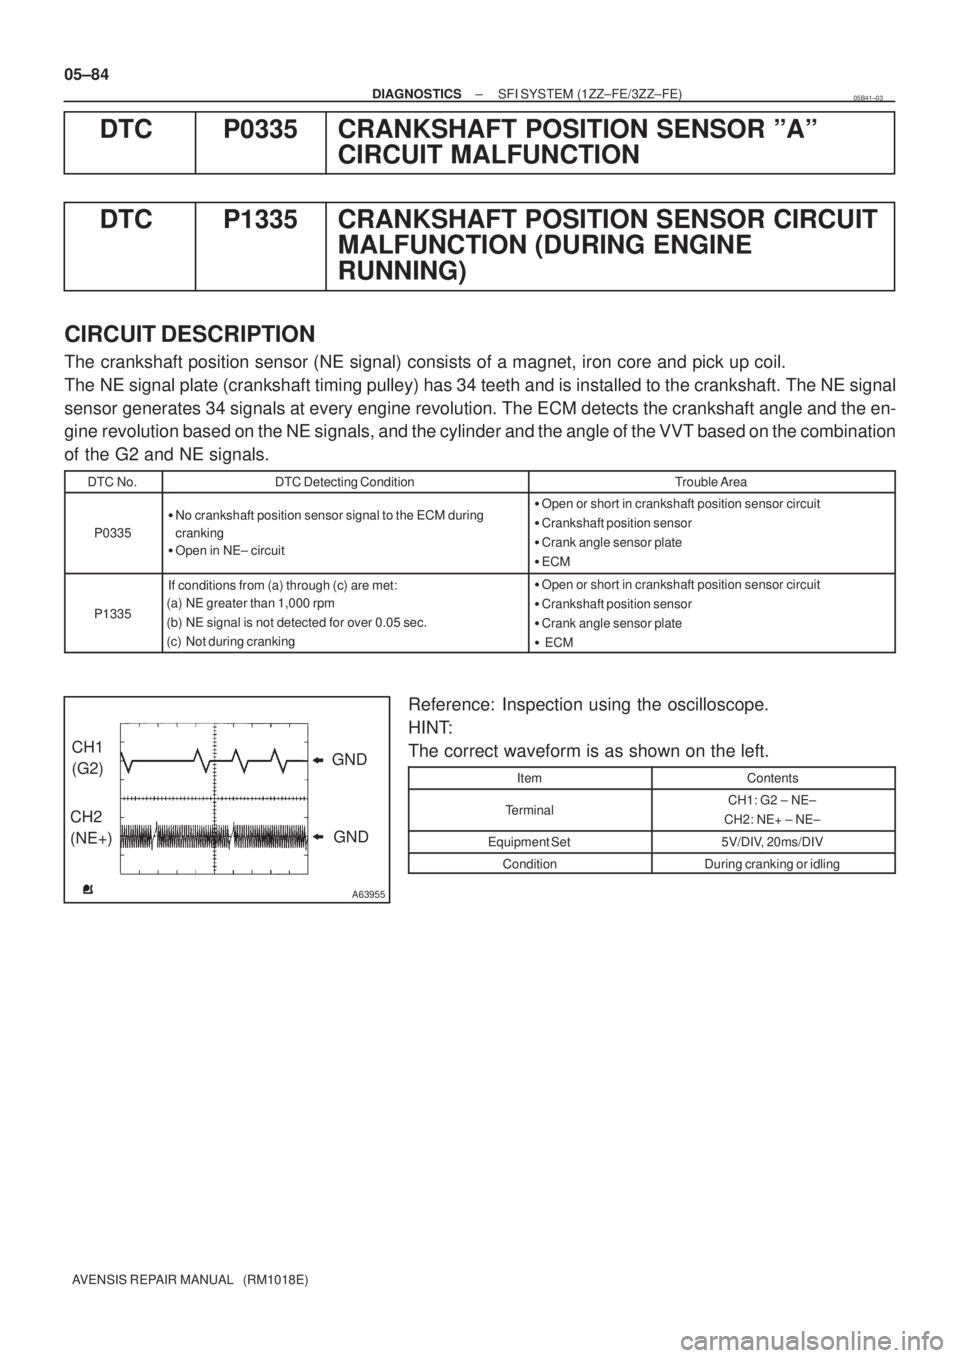 TOYOTA AVENSIS 2005  Service Repair Manual A63955
GND CH1
(G2)
CH2
(NE+)GND 05±84
± DIAGNOSTICSSFI SYSTEM (1ZZ±FE/3ZZ±FE)
AVENSIS REPAIR MANUAL   (RM1018E)
DTC P0335 CRANKSHAFT POSITION SENSOR ºAº
CIRCUIT MALFUNCTION
DTC P1335 CRANKSHAFT